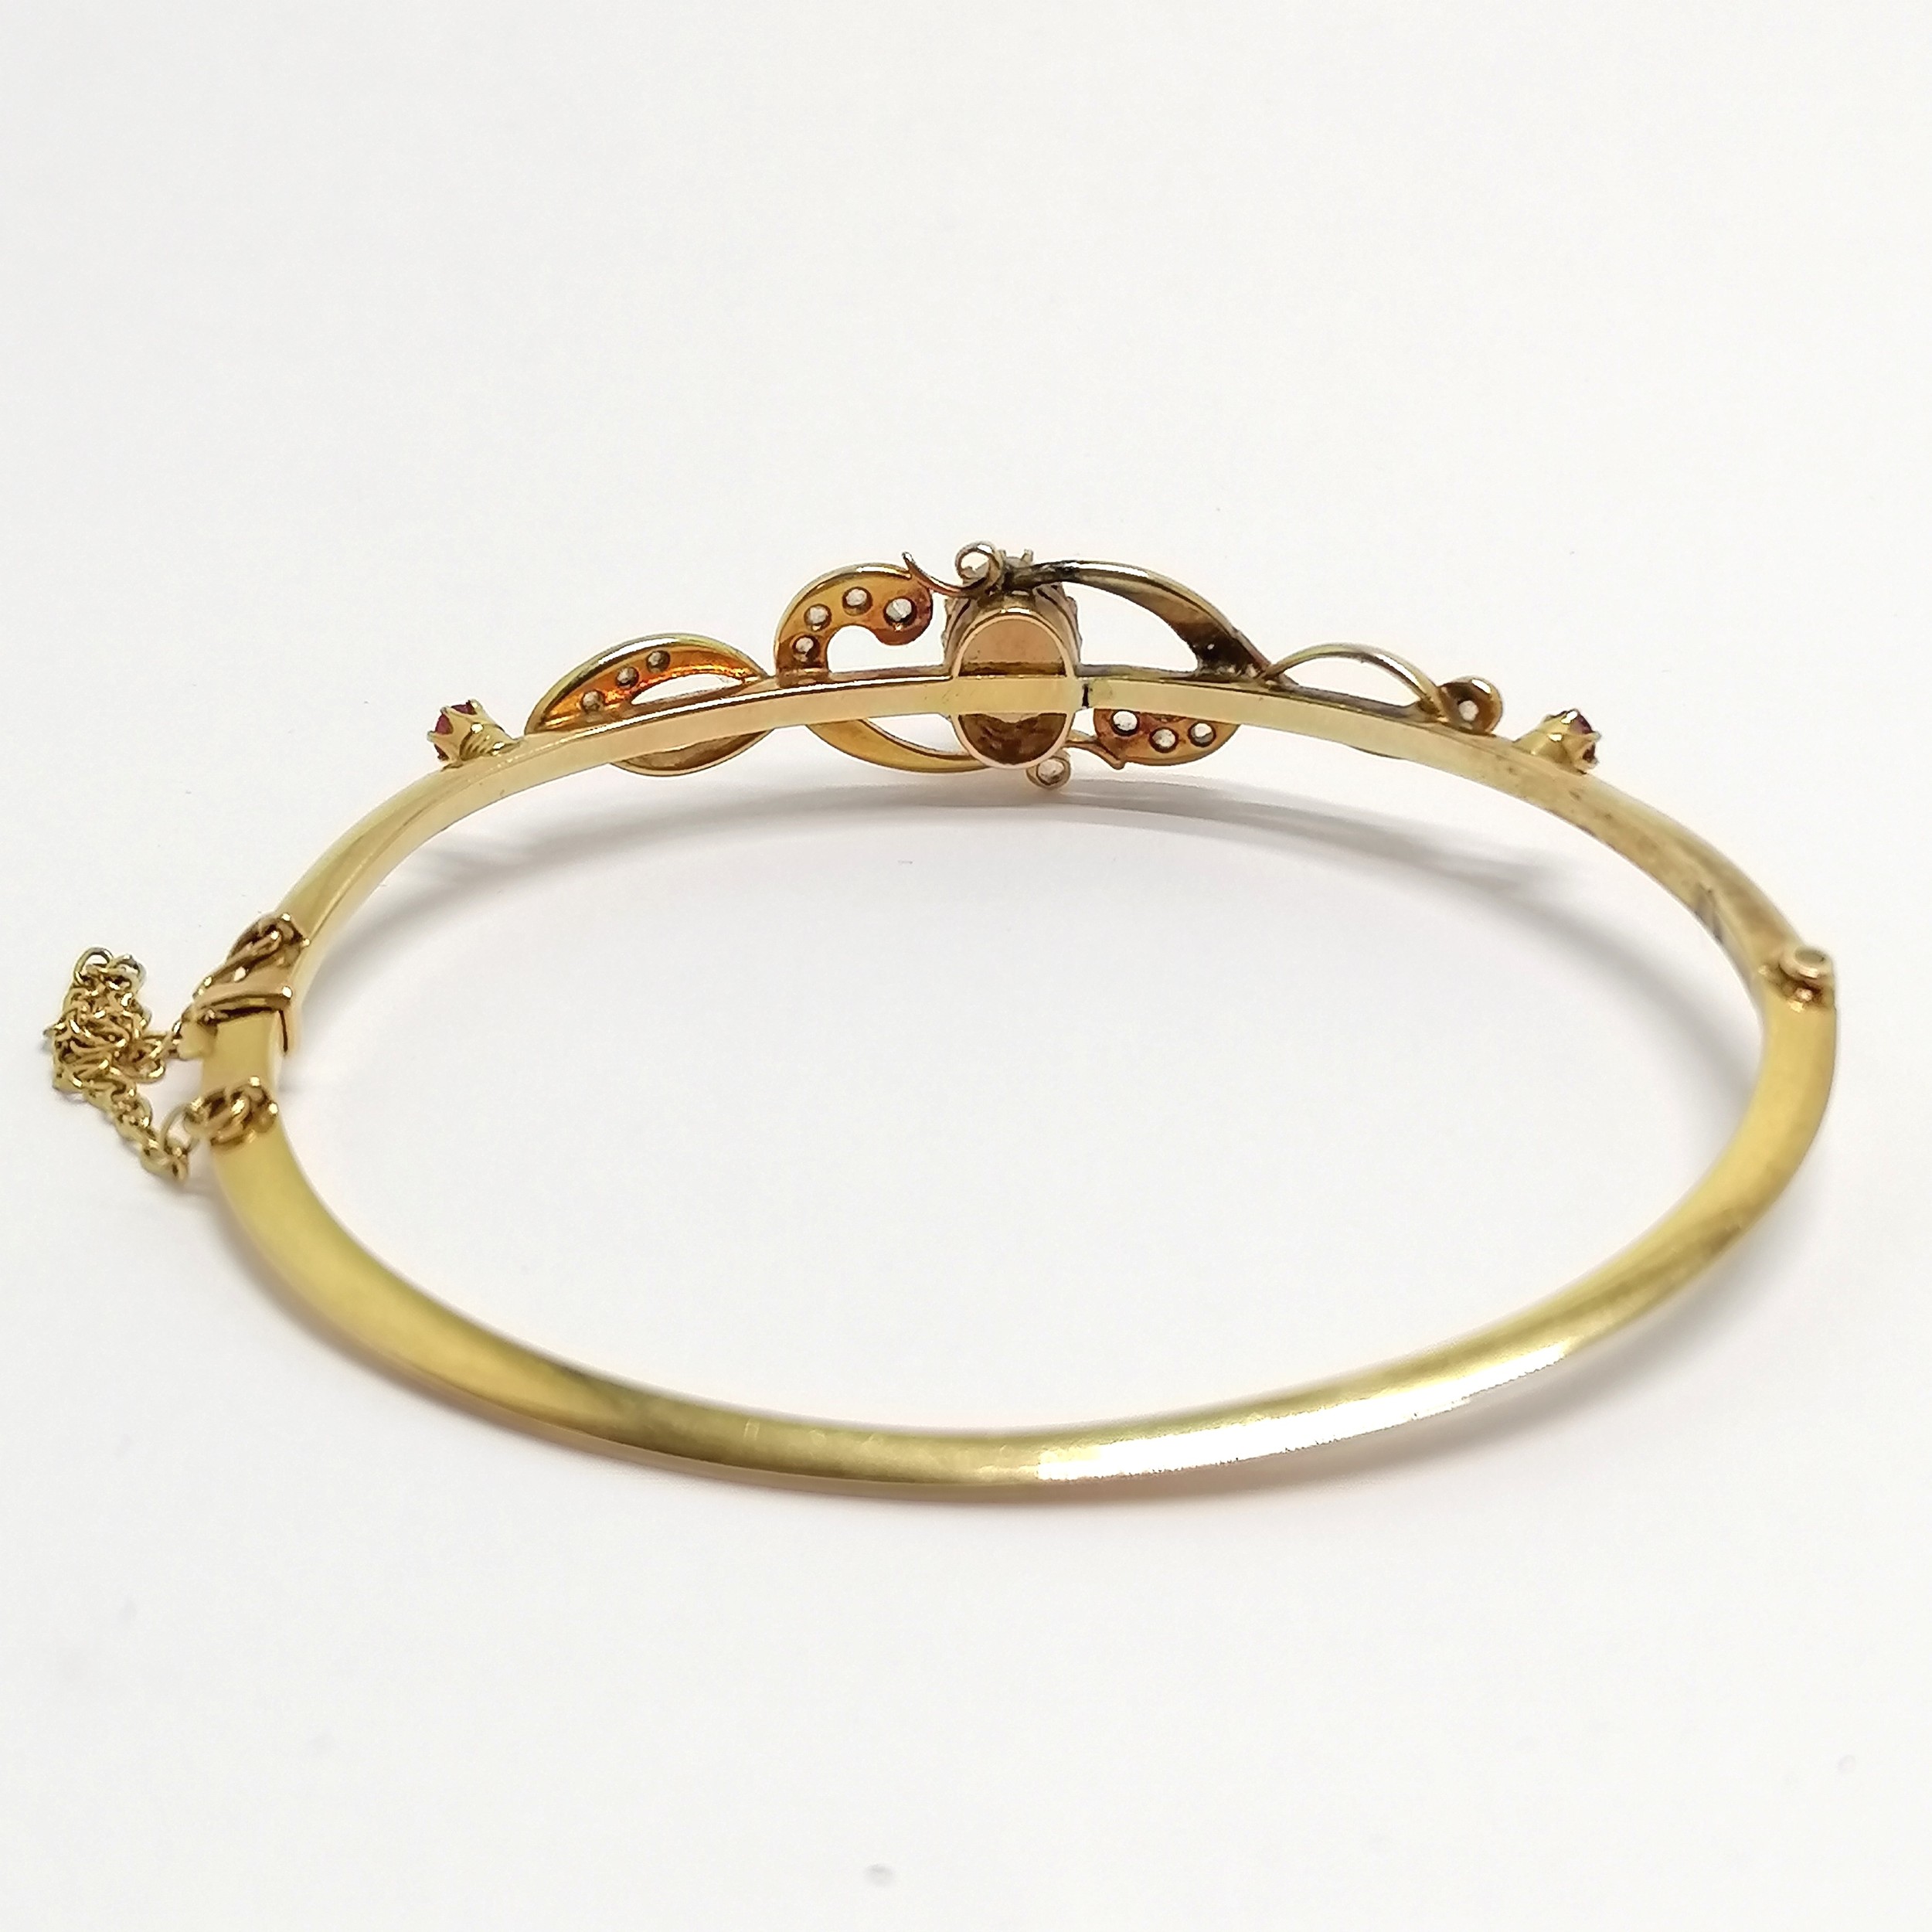 Antique Art Nouveau unmarked (tests as 14ct) gold opal / diamond / ruby set bangle - 6cm across & - Image 5 of 7